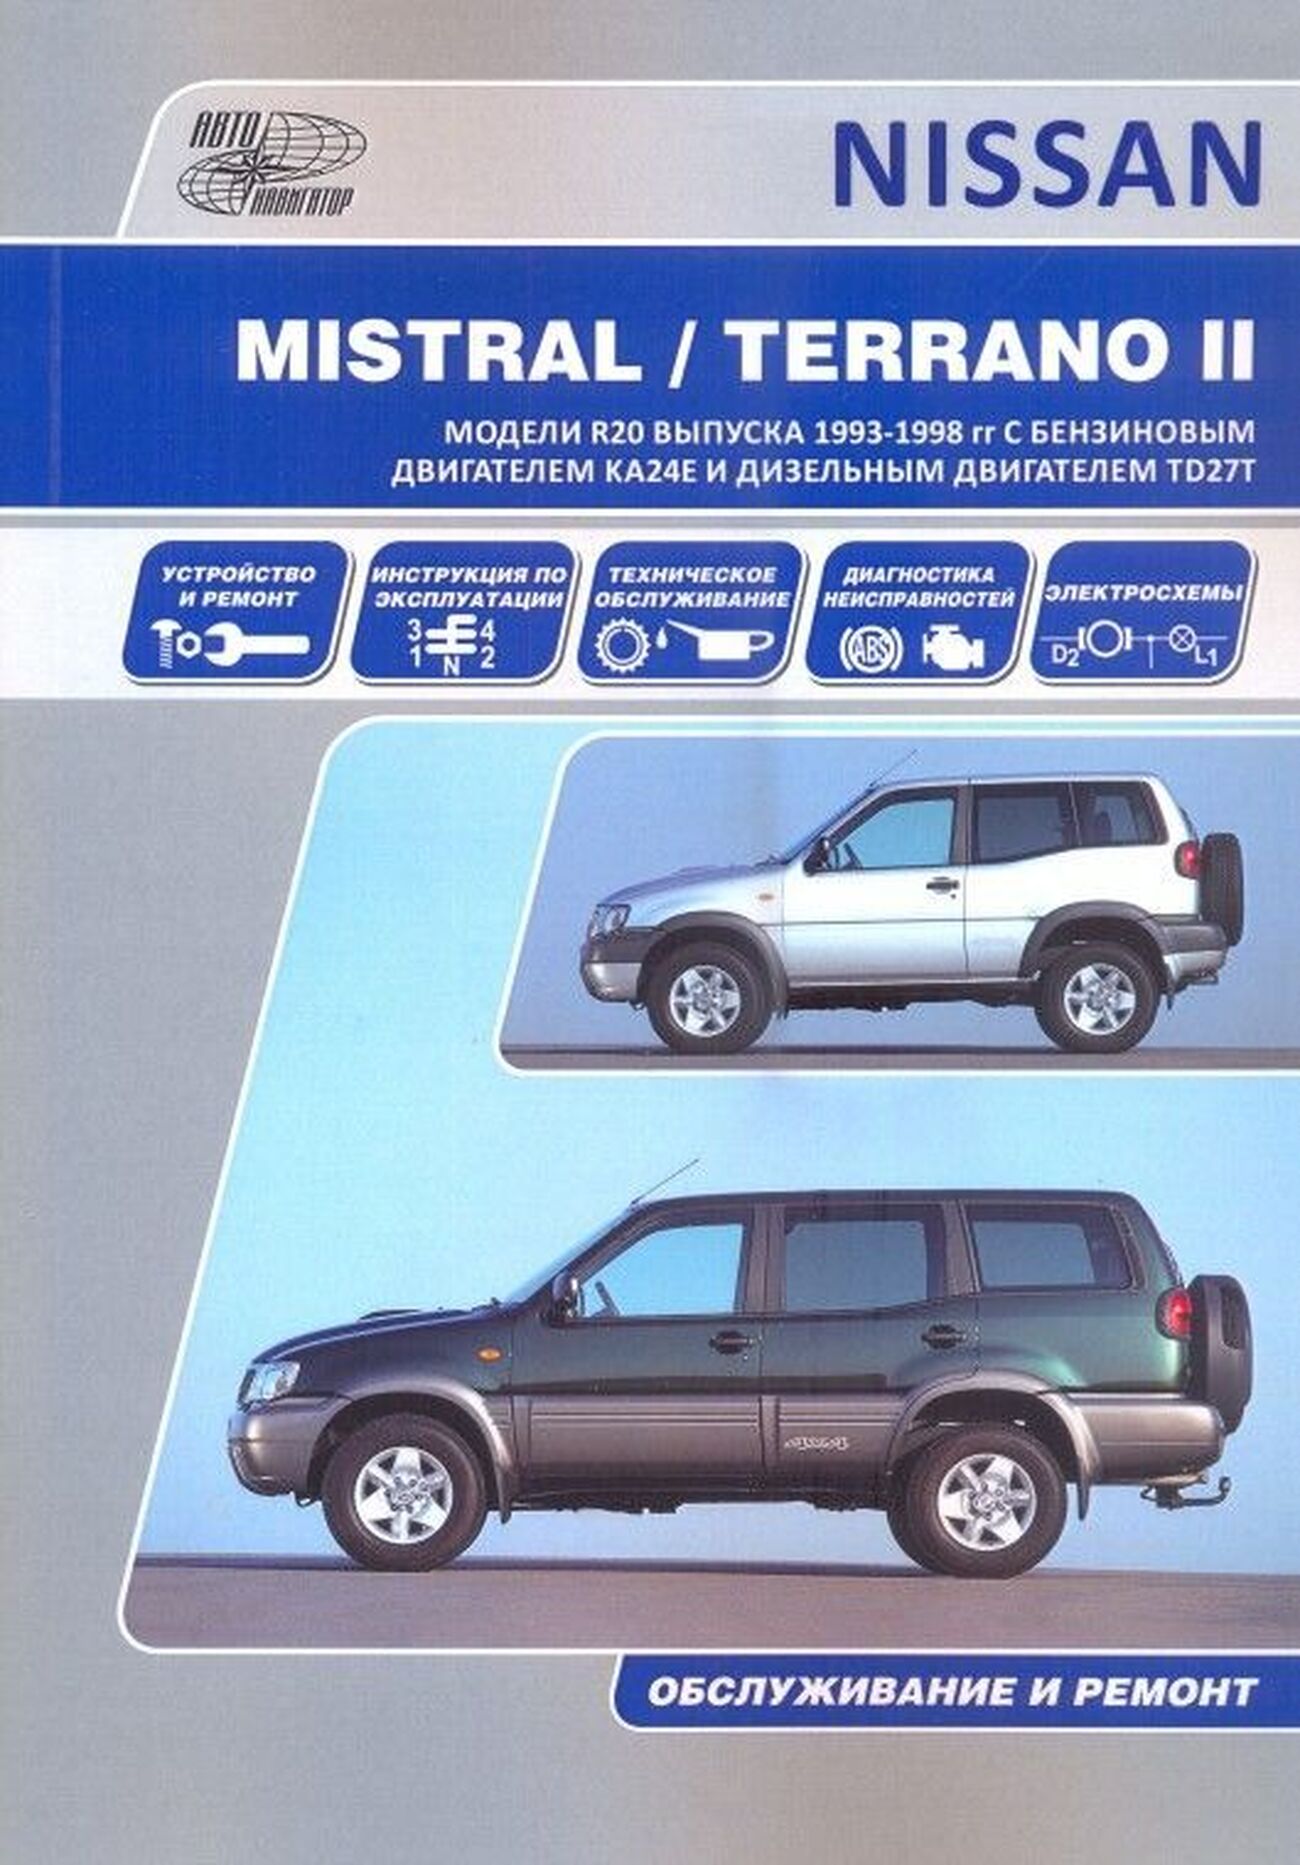 Книга: FORD MAVERICK / NISSAN MISTRAL / TERRANO II (б , д) c 1993 г.в., рем., экспл., то | Автонавигатор